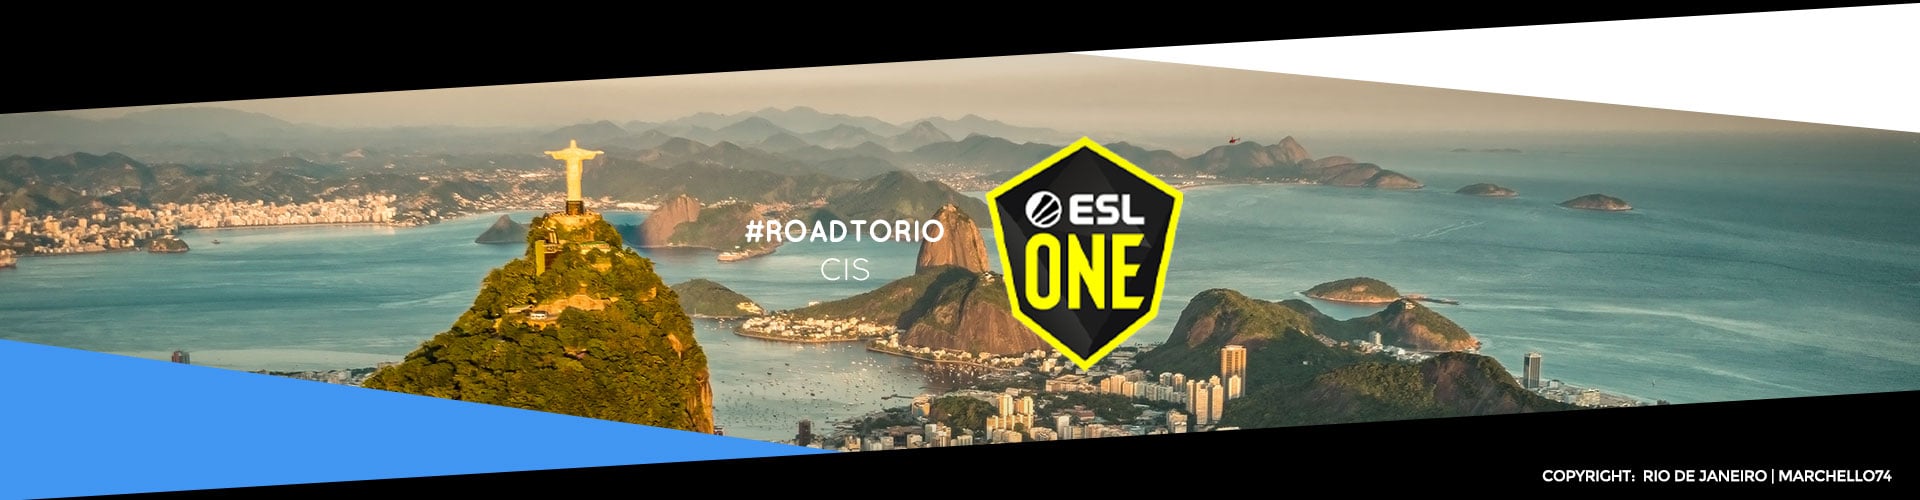 Road to Rio CIS